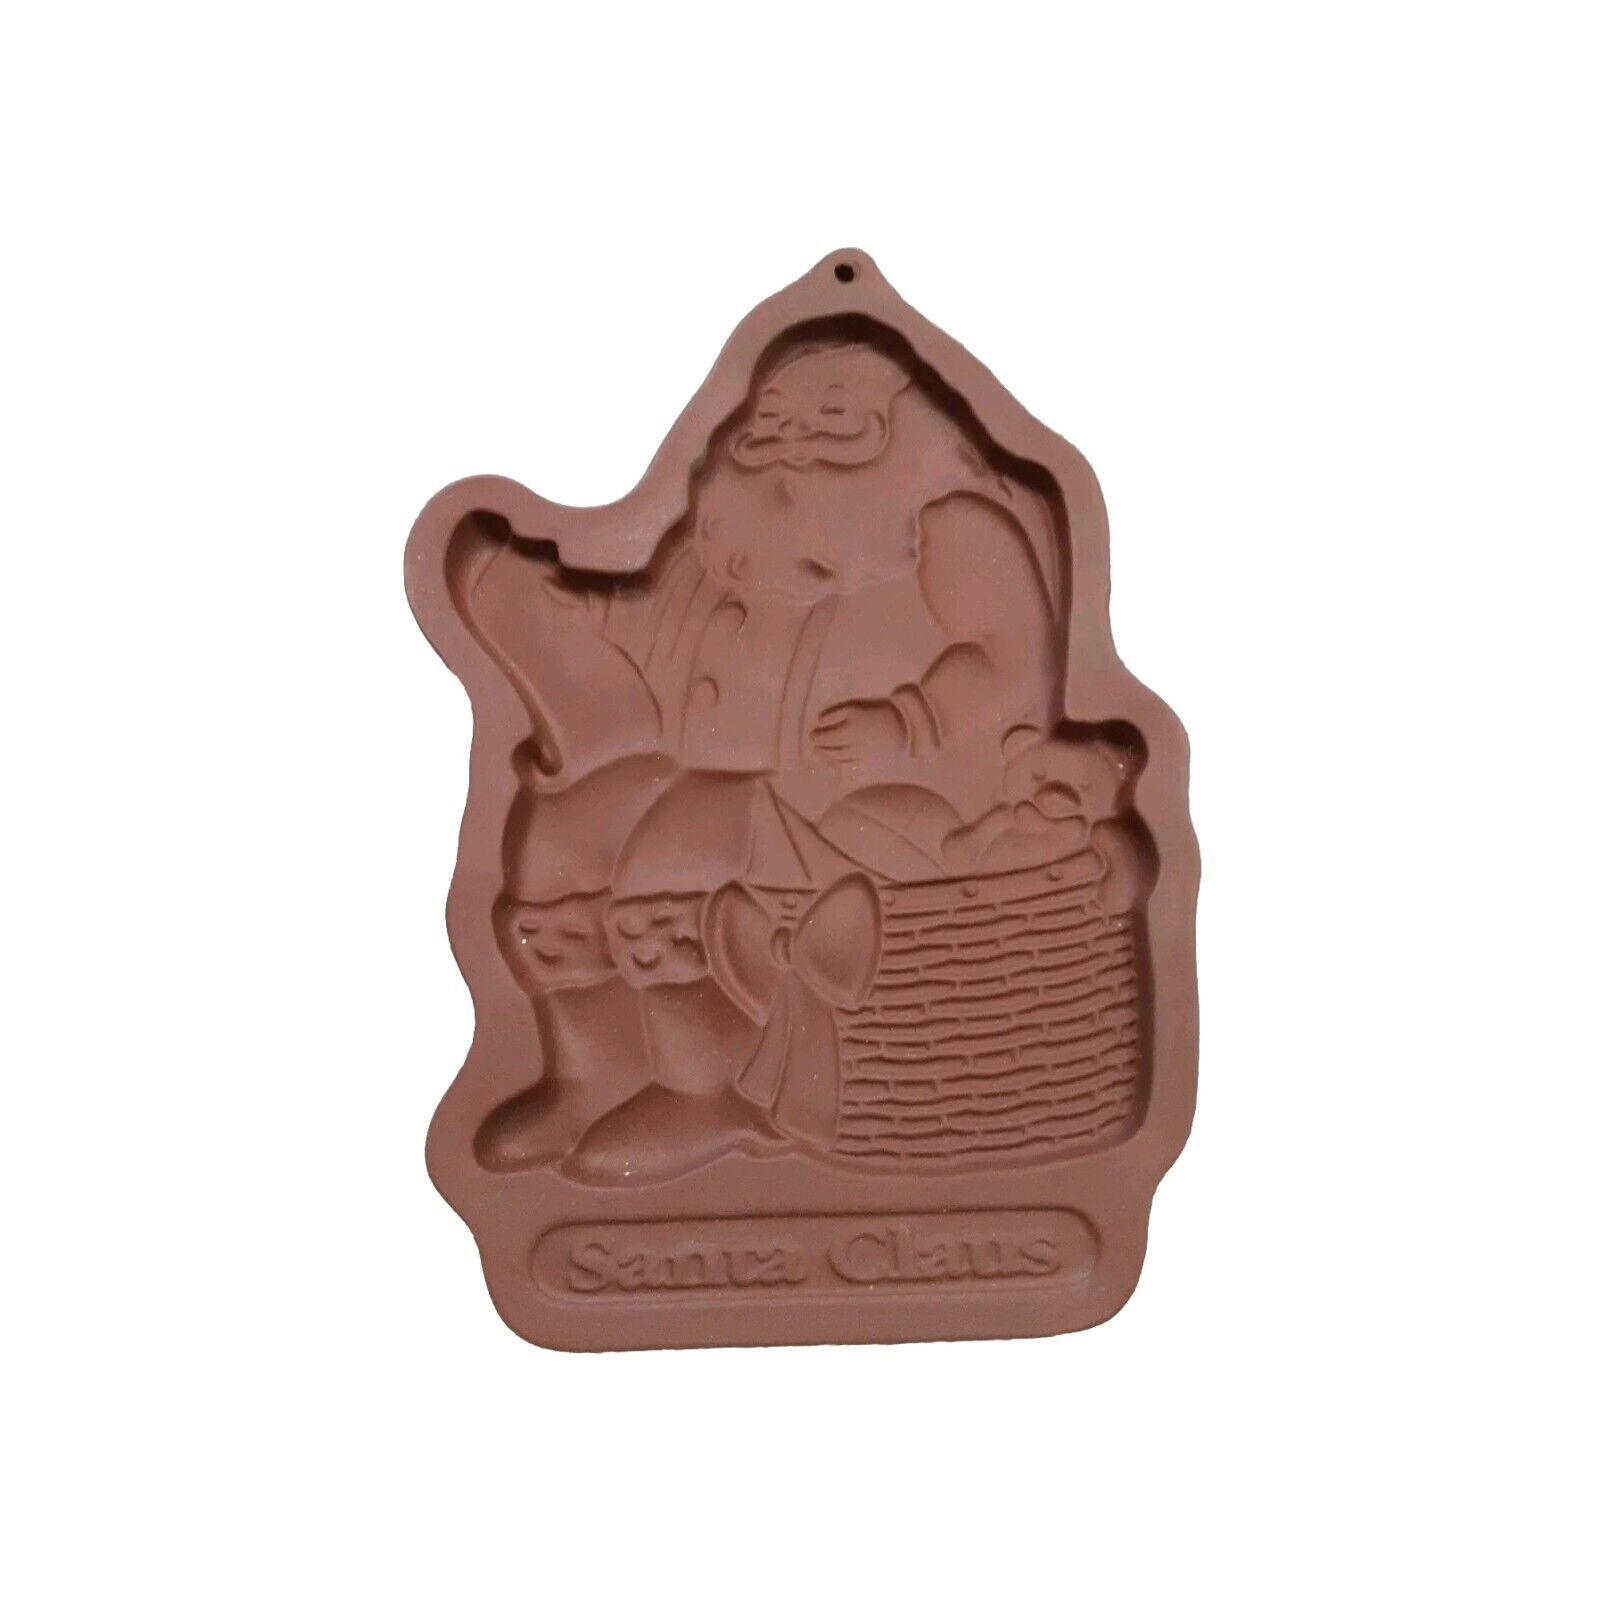 VTG Longaberger Pottery 1992 Santa Claus Cookie/Chocolate Mold Christmas w/Box